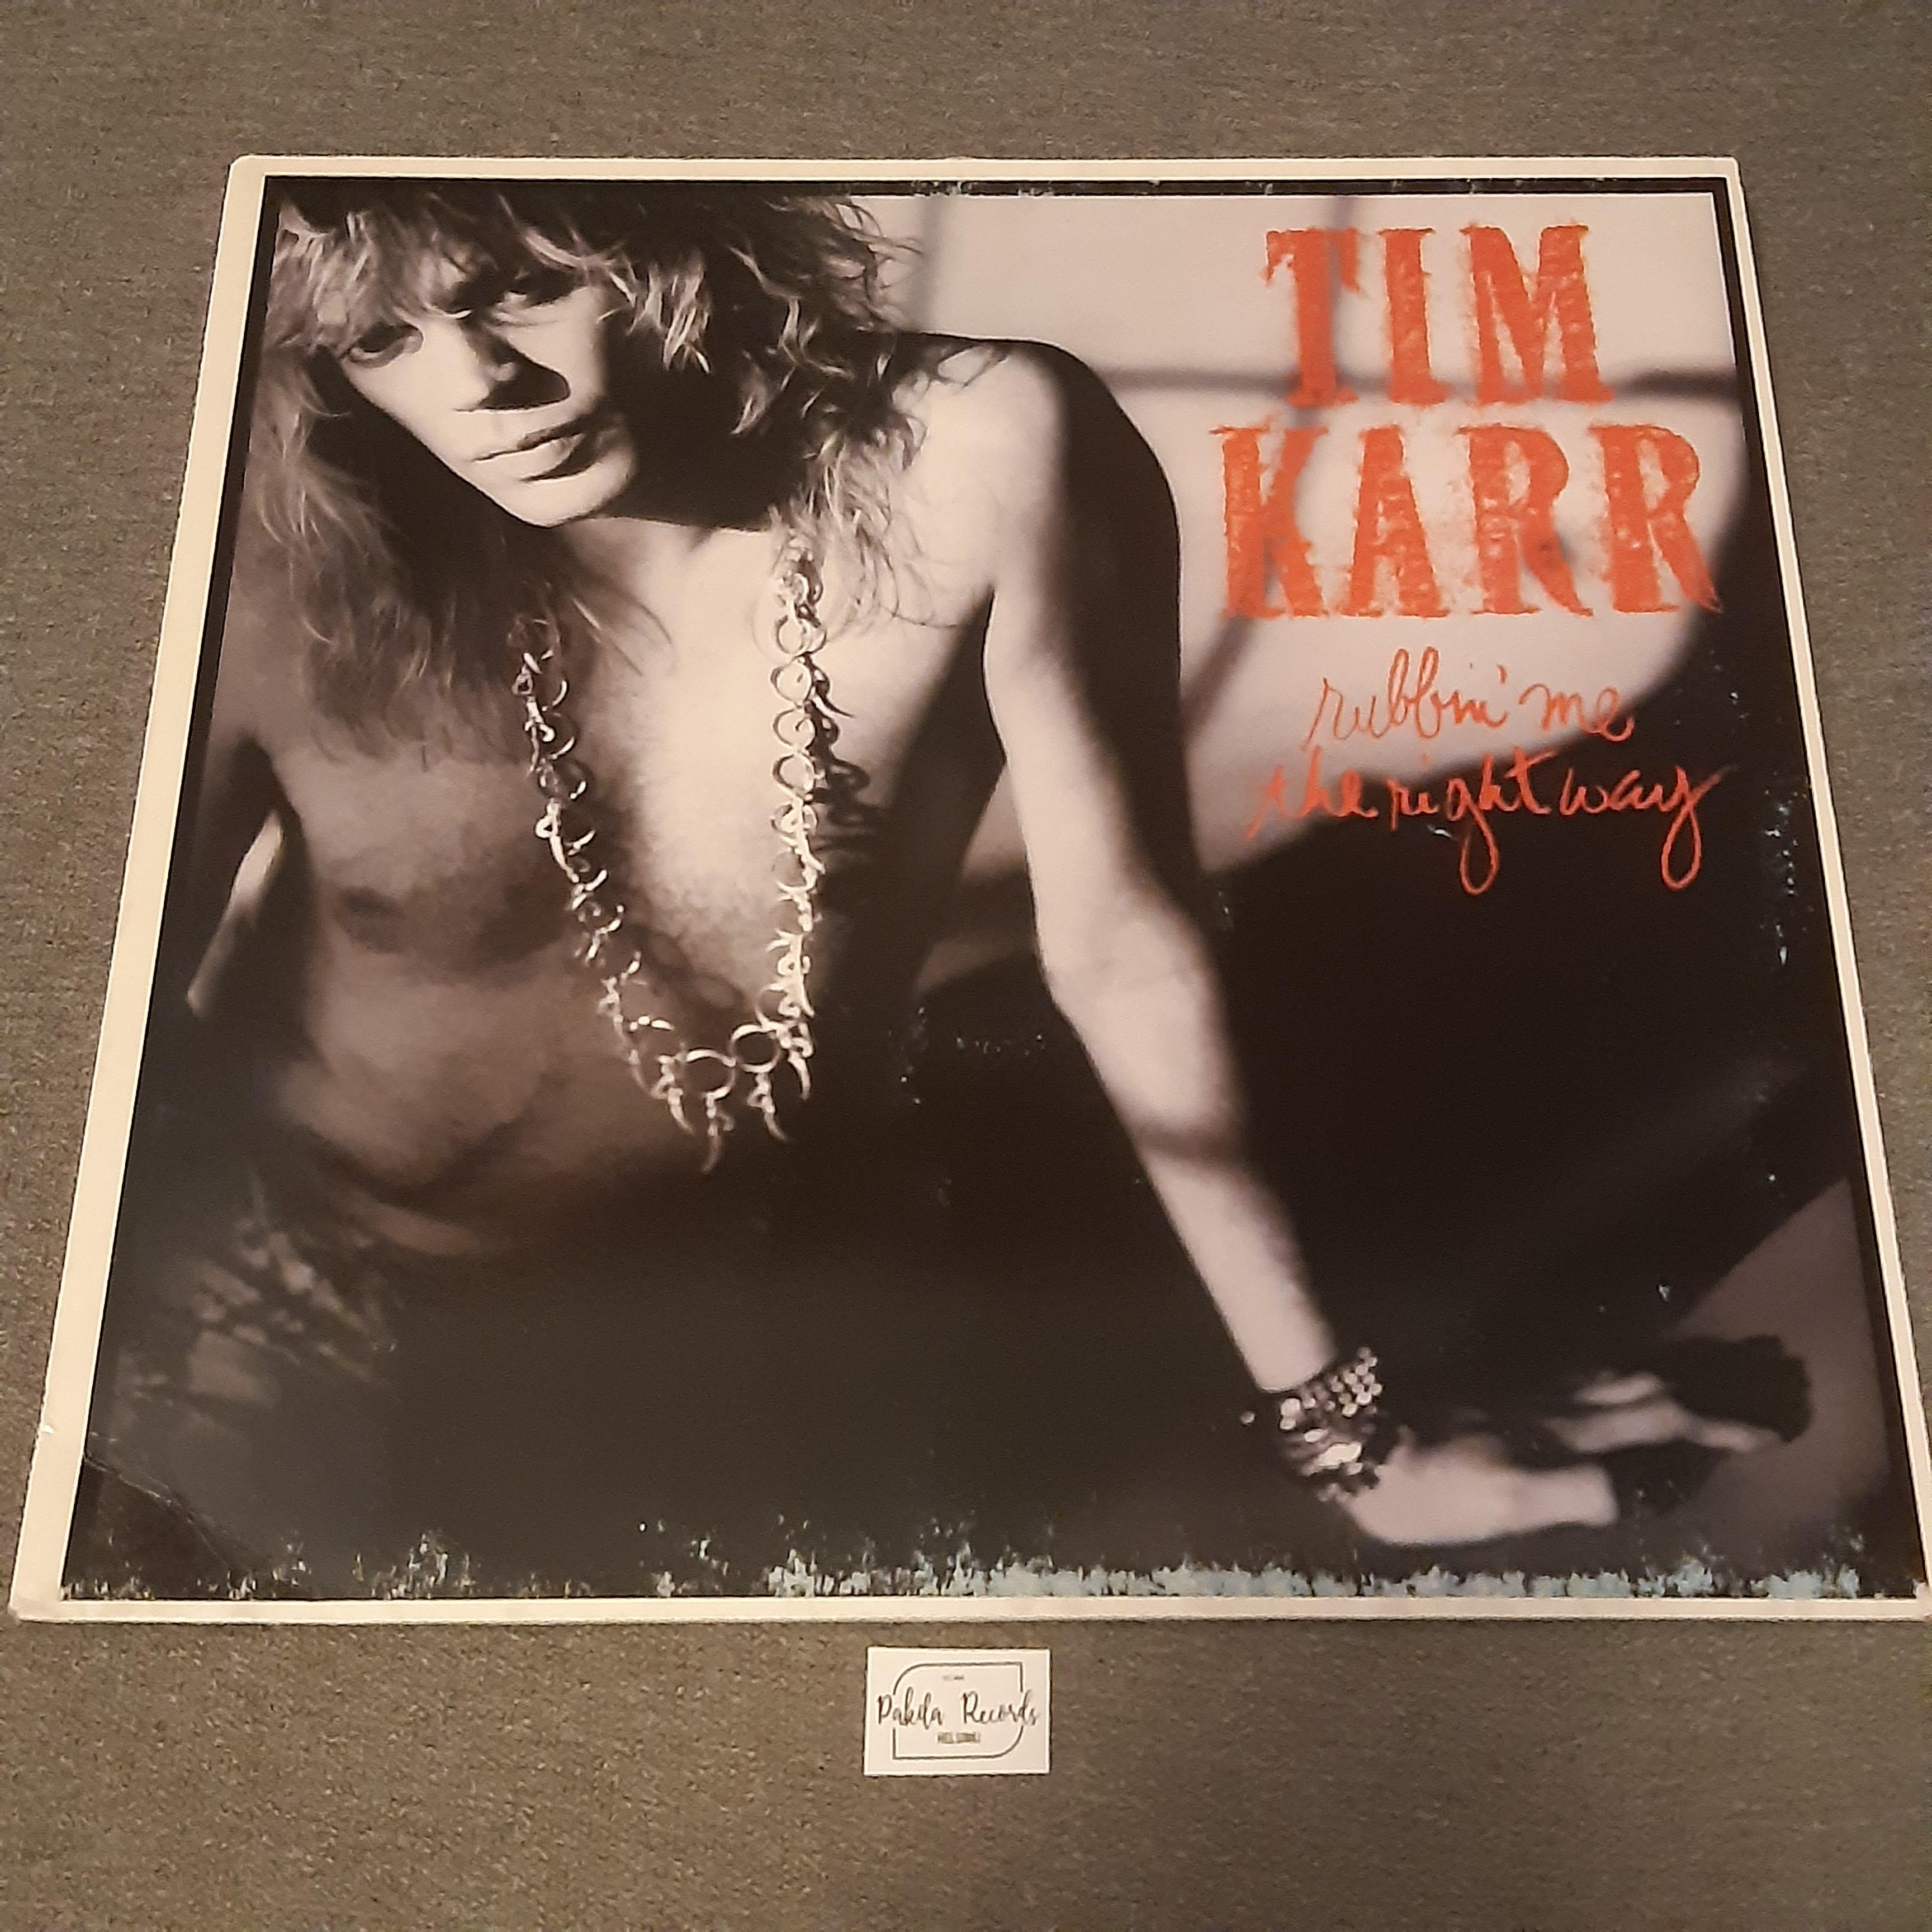 Tim Karr - Rubbin' Me The Right Way - LP (käytetty)